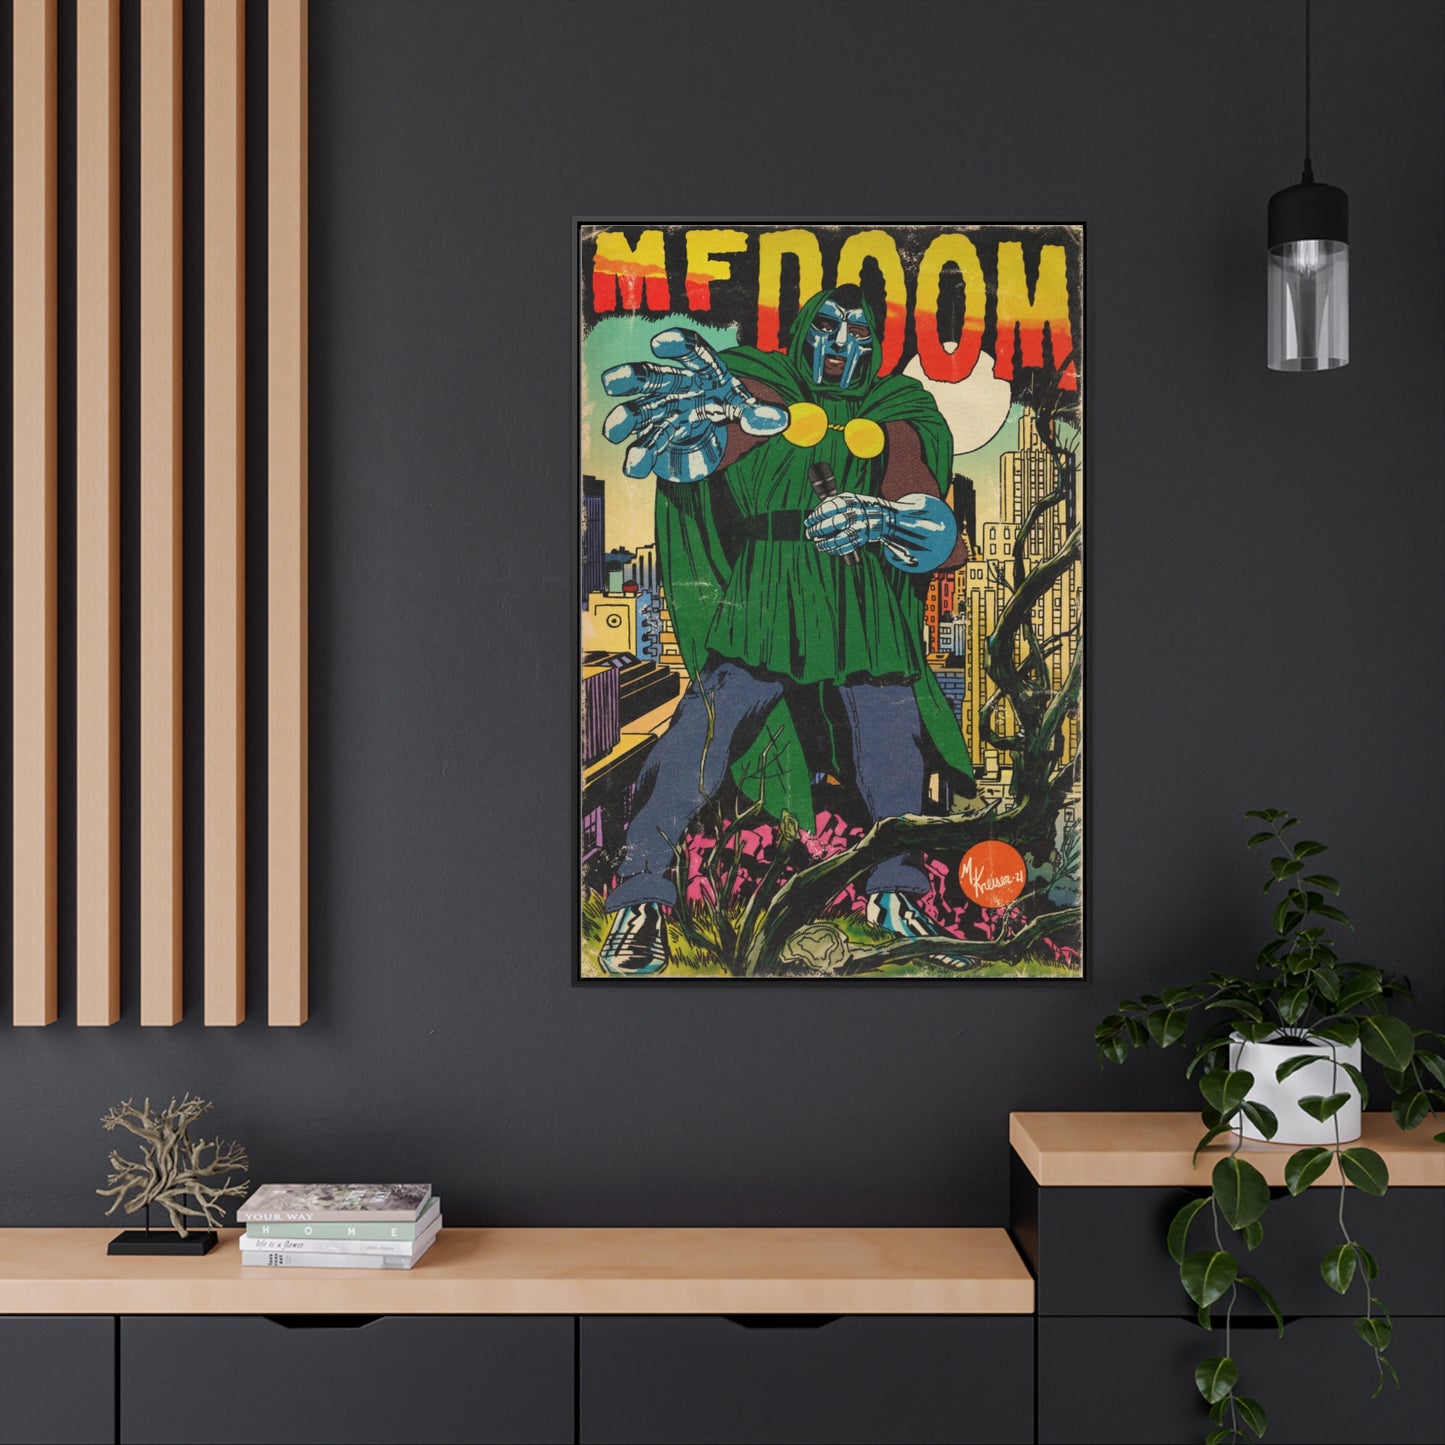 MF DOOM - Hip Hop Comics - Gallery Canvas Wraps, Vertical Frame